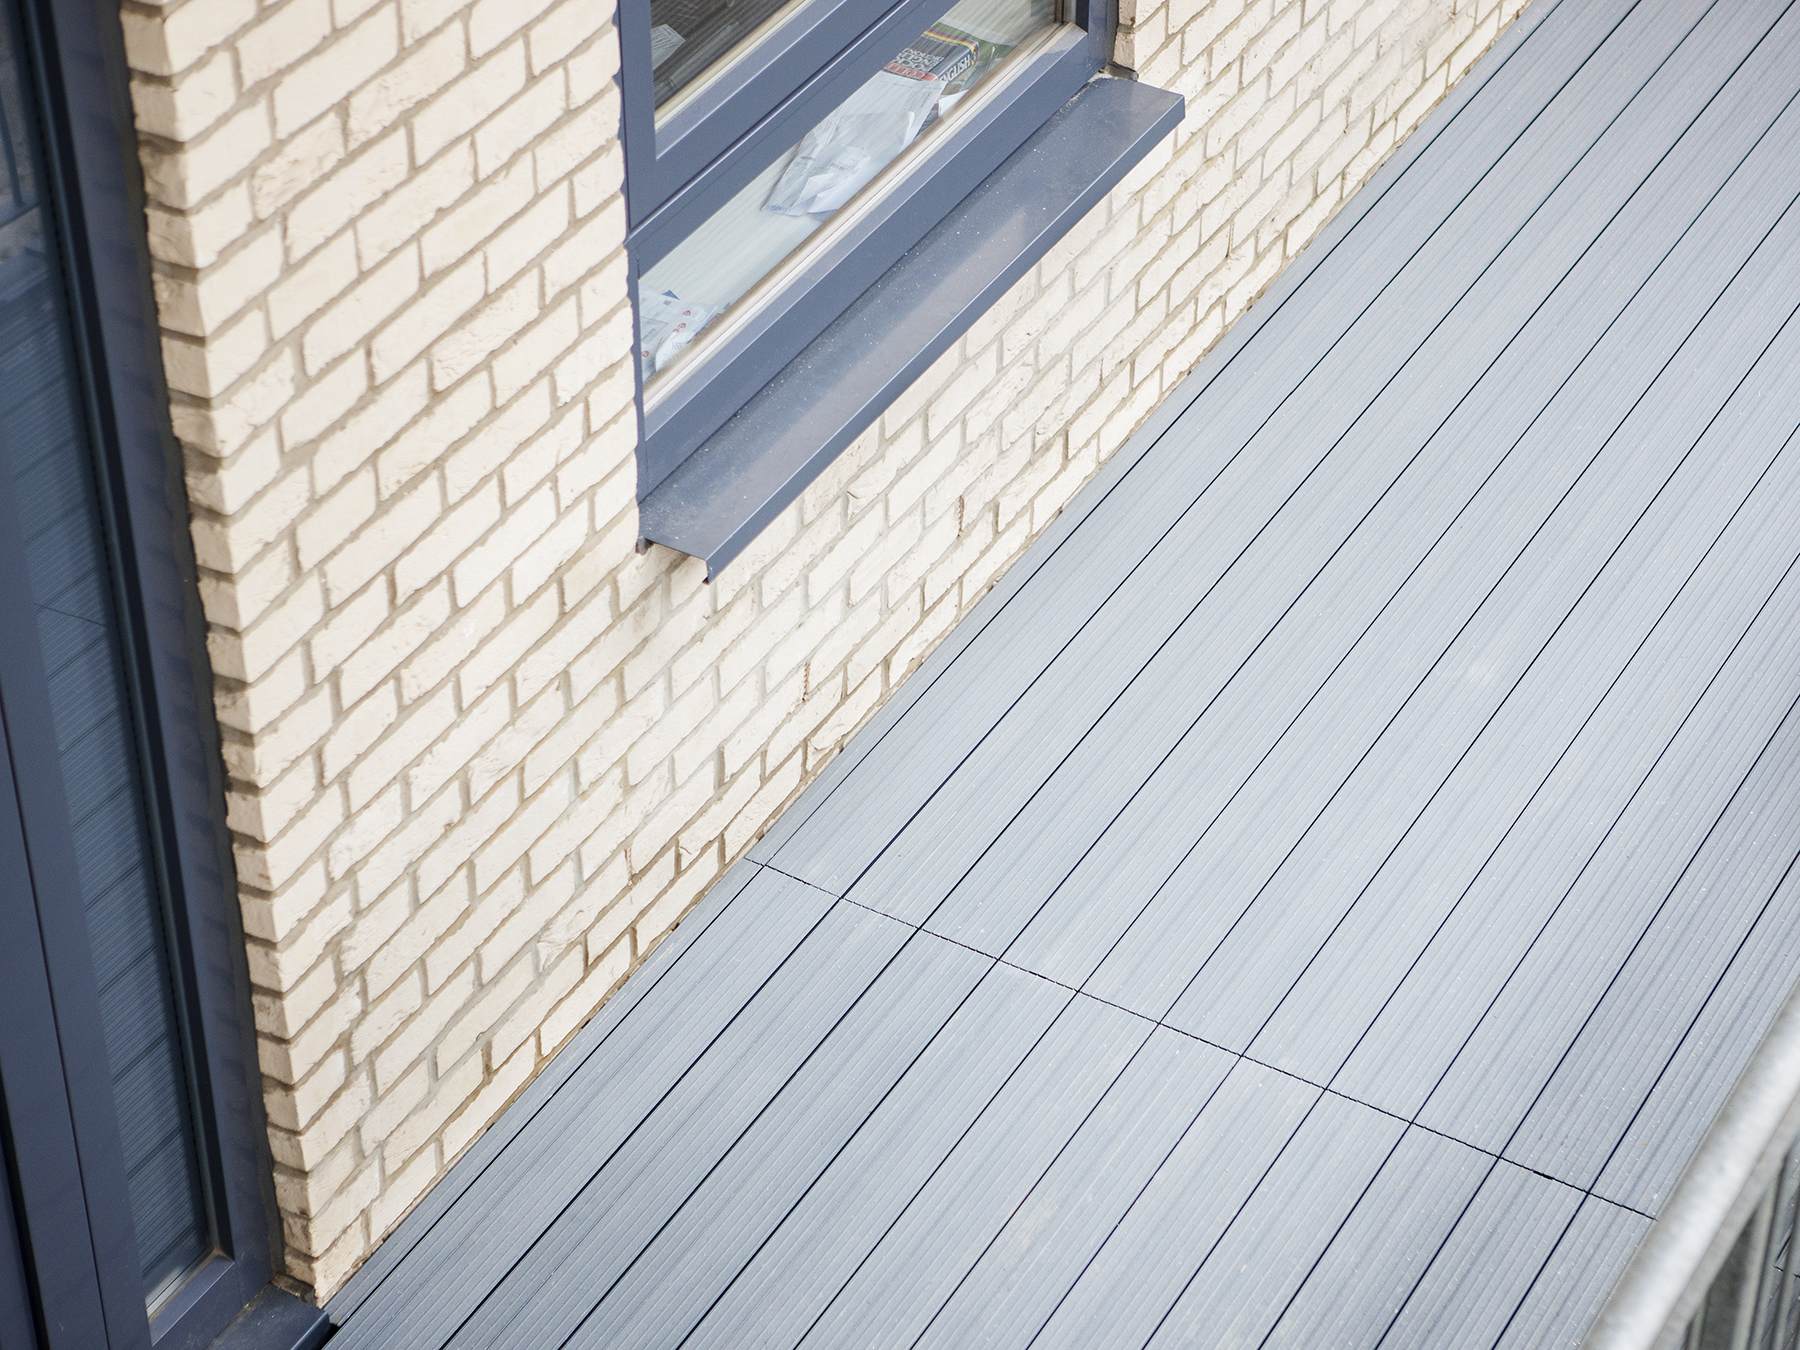 AliDeck Aluminium Decking installed in balconies at prestigious development in East London